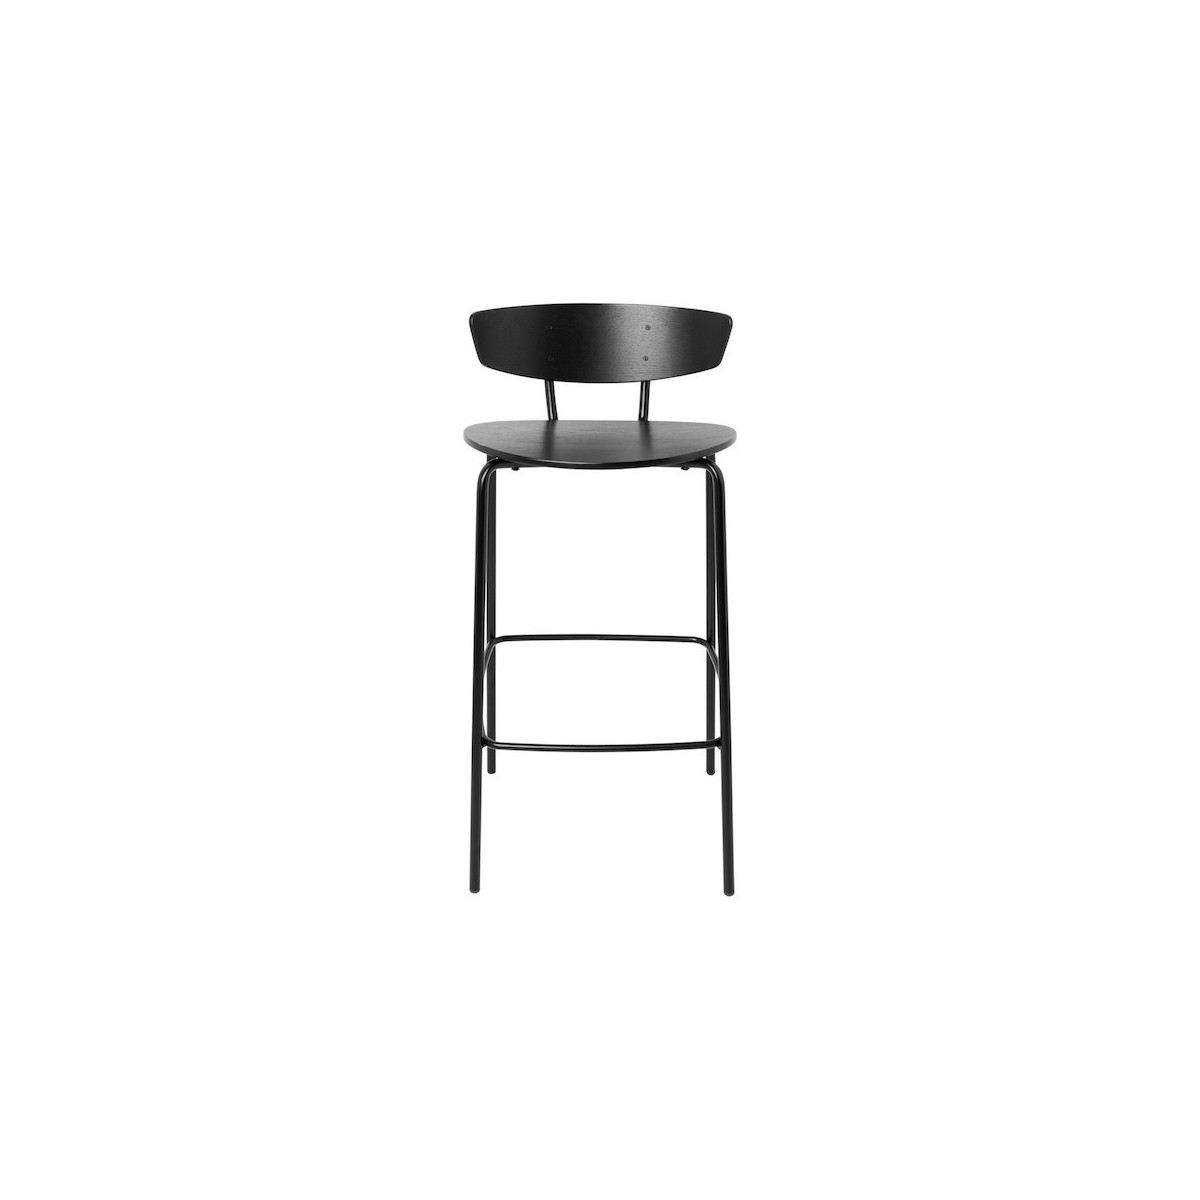 H64cm - black - Herman bar stool